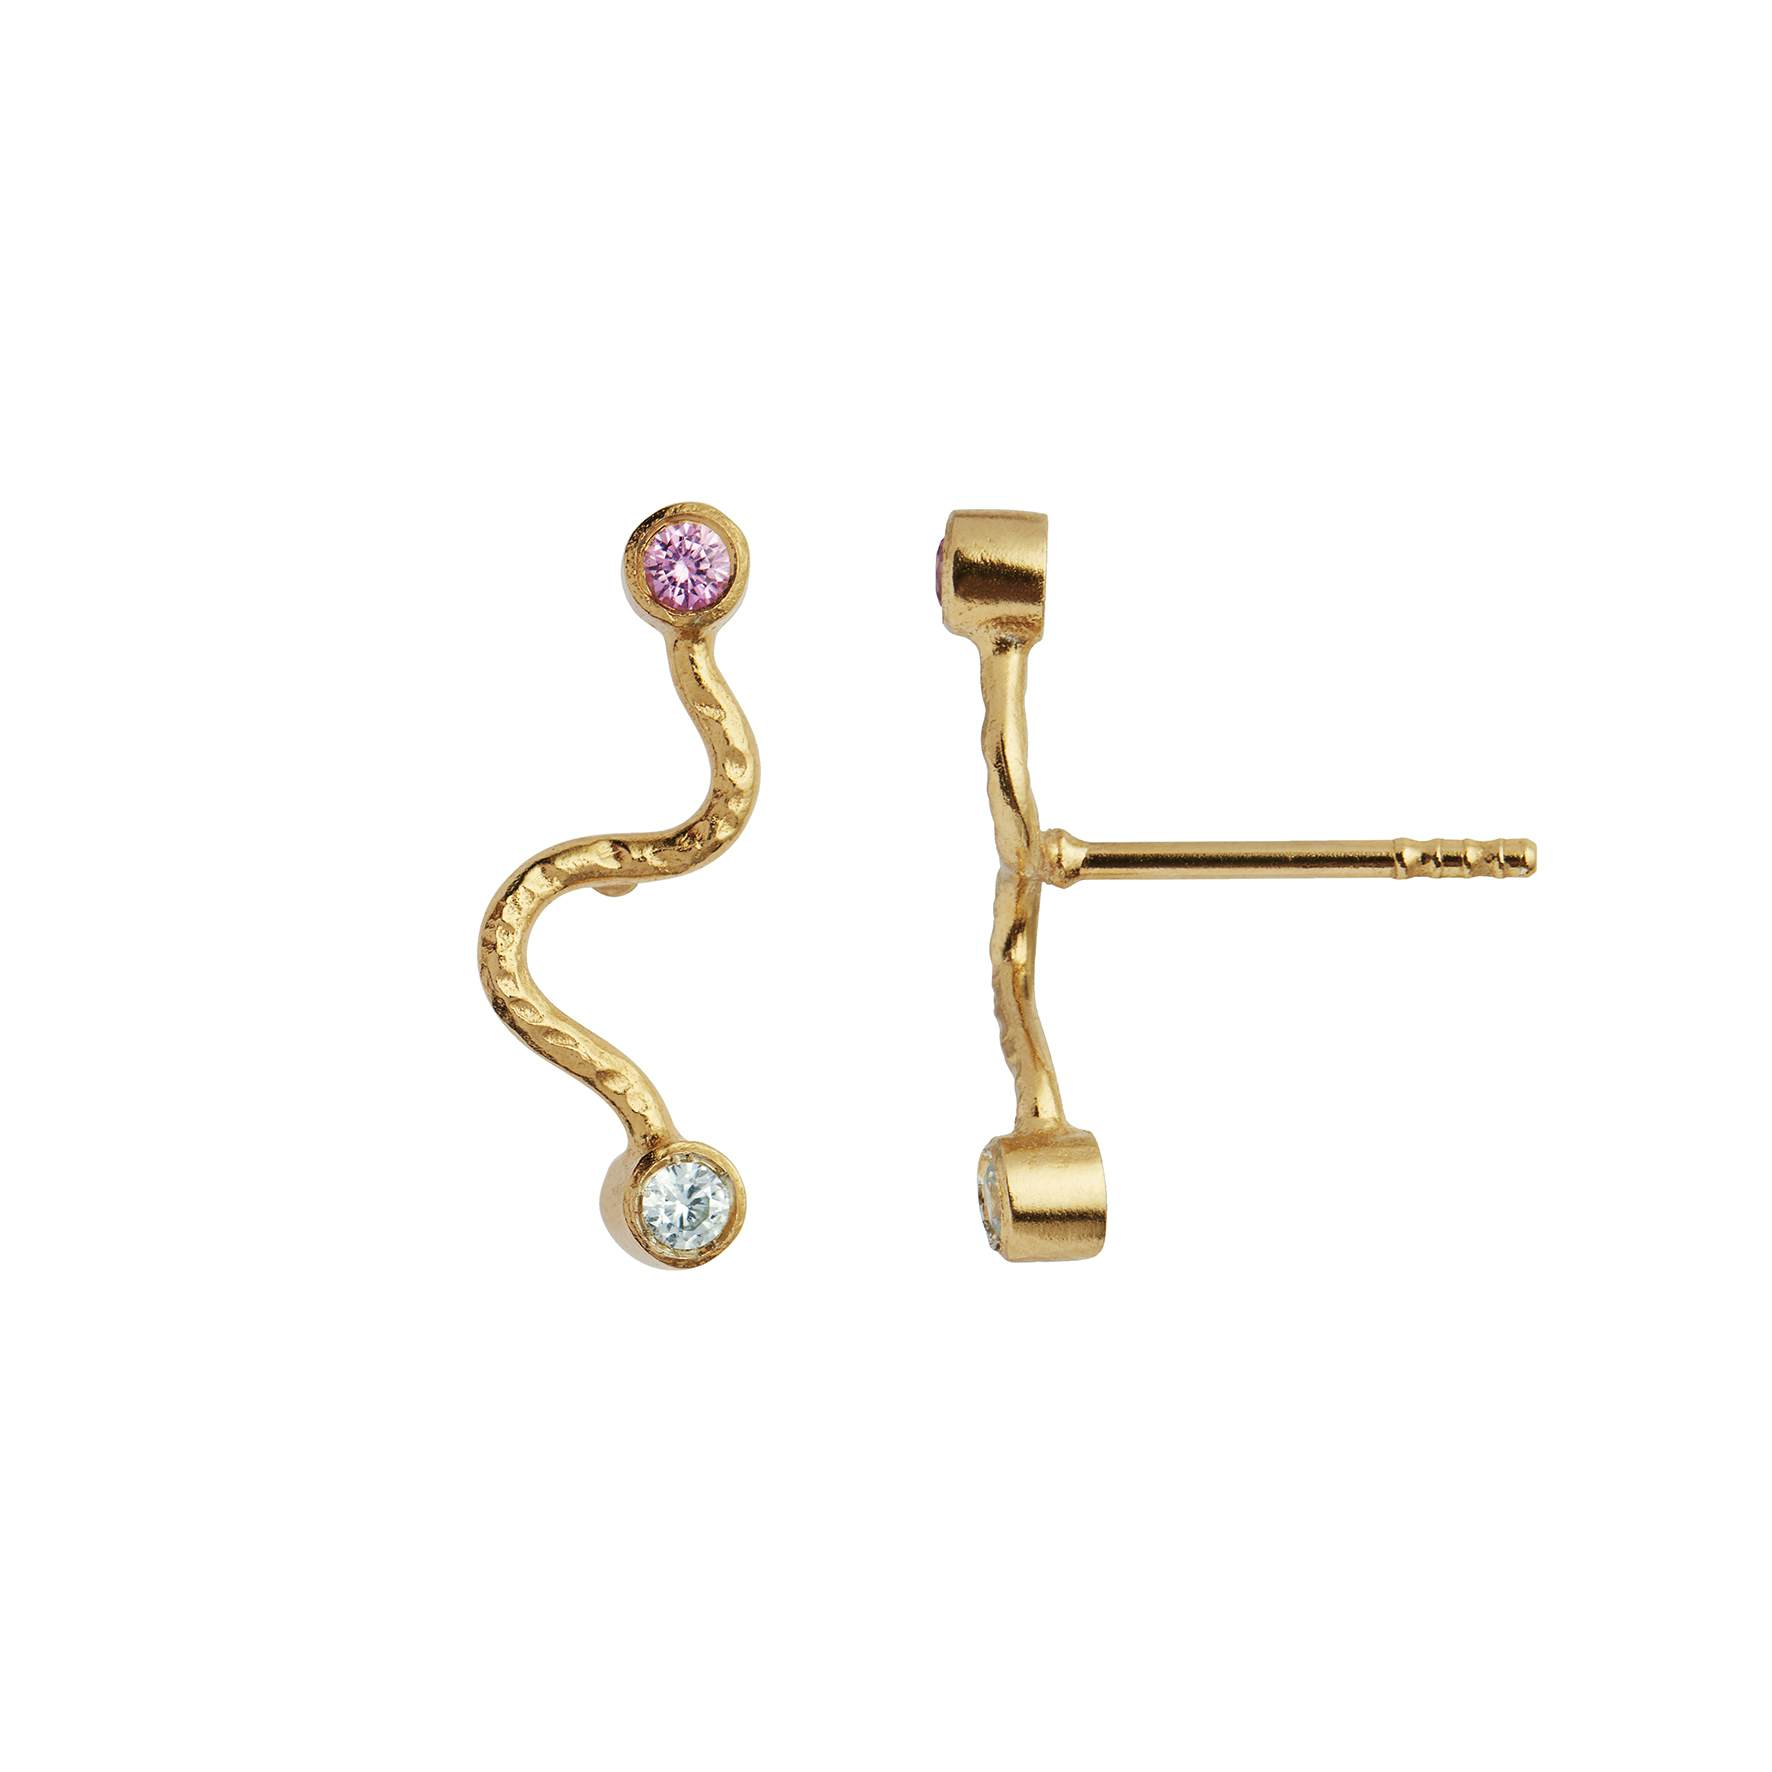 Big Wave Earstick With Pastel Pink & Blue Stones von STINE A Jewelry in Vergoldet-Silber Sterling 925